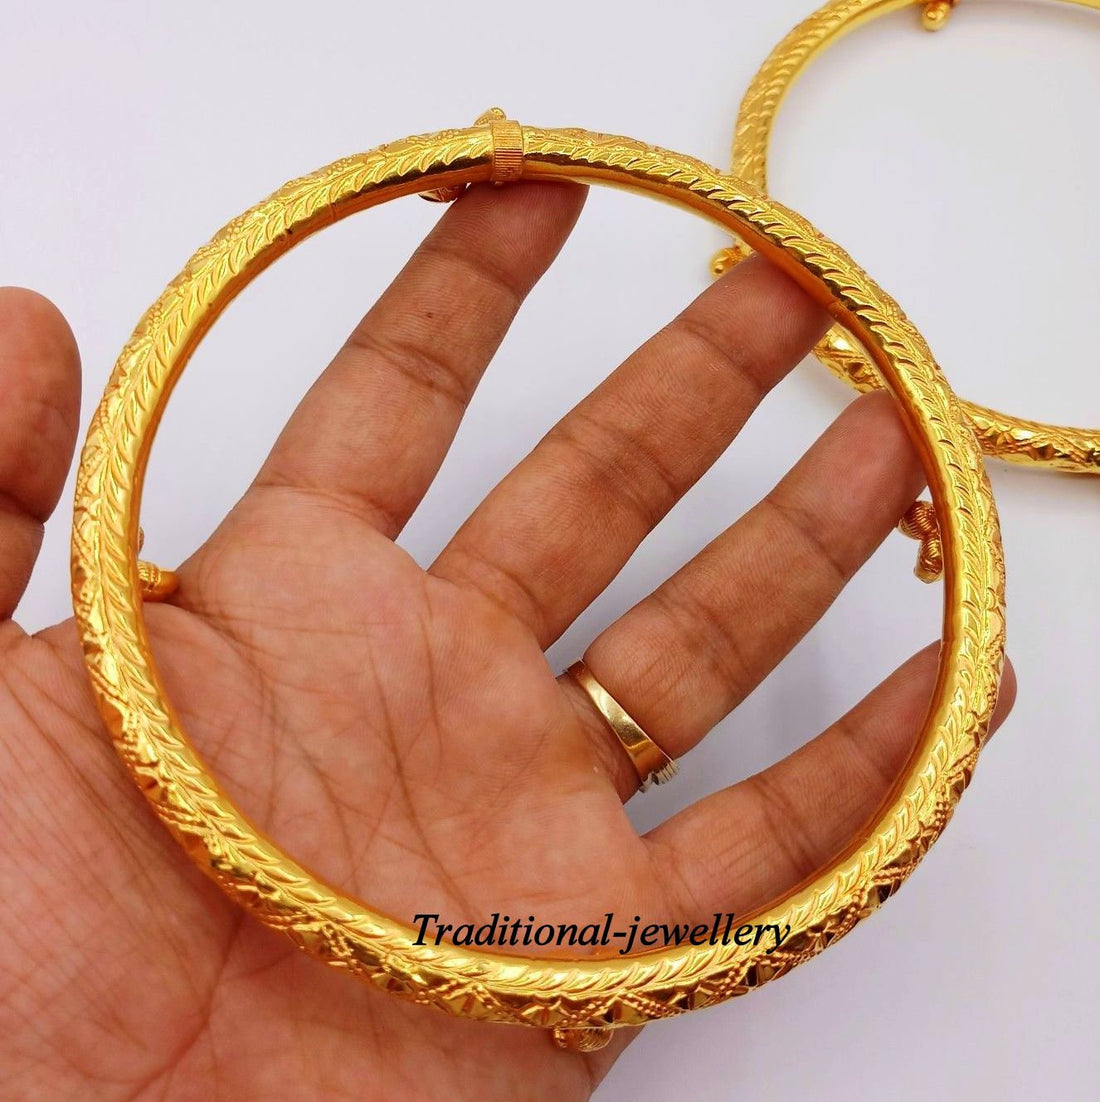 Vintage handmade antique design fabulous 22karat yellow gold foot bracelet ankle bracelet anklet pair women's tribal jewelry - TRIBAL ORNAMENTS